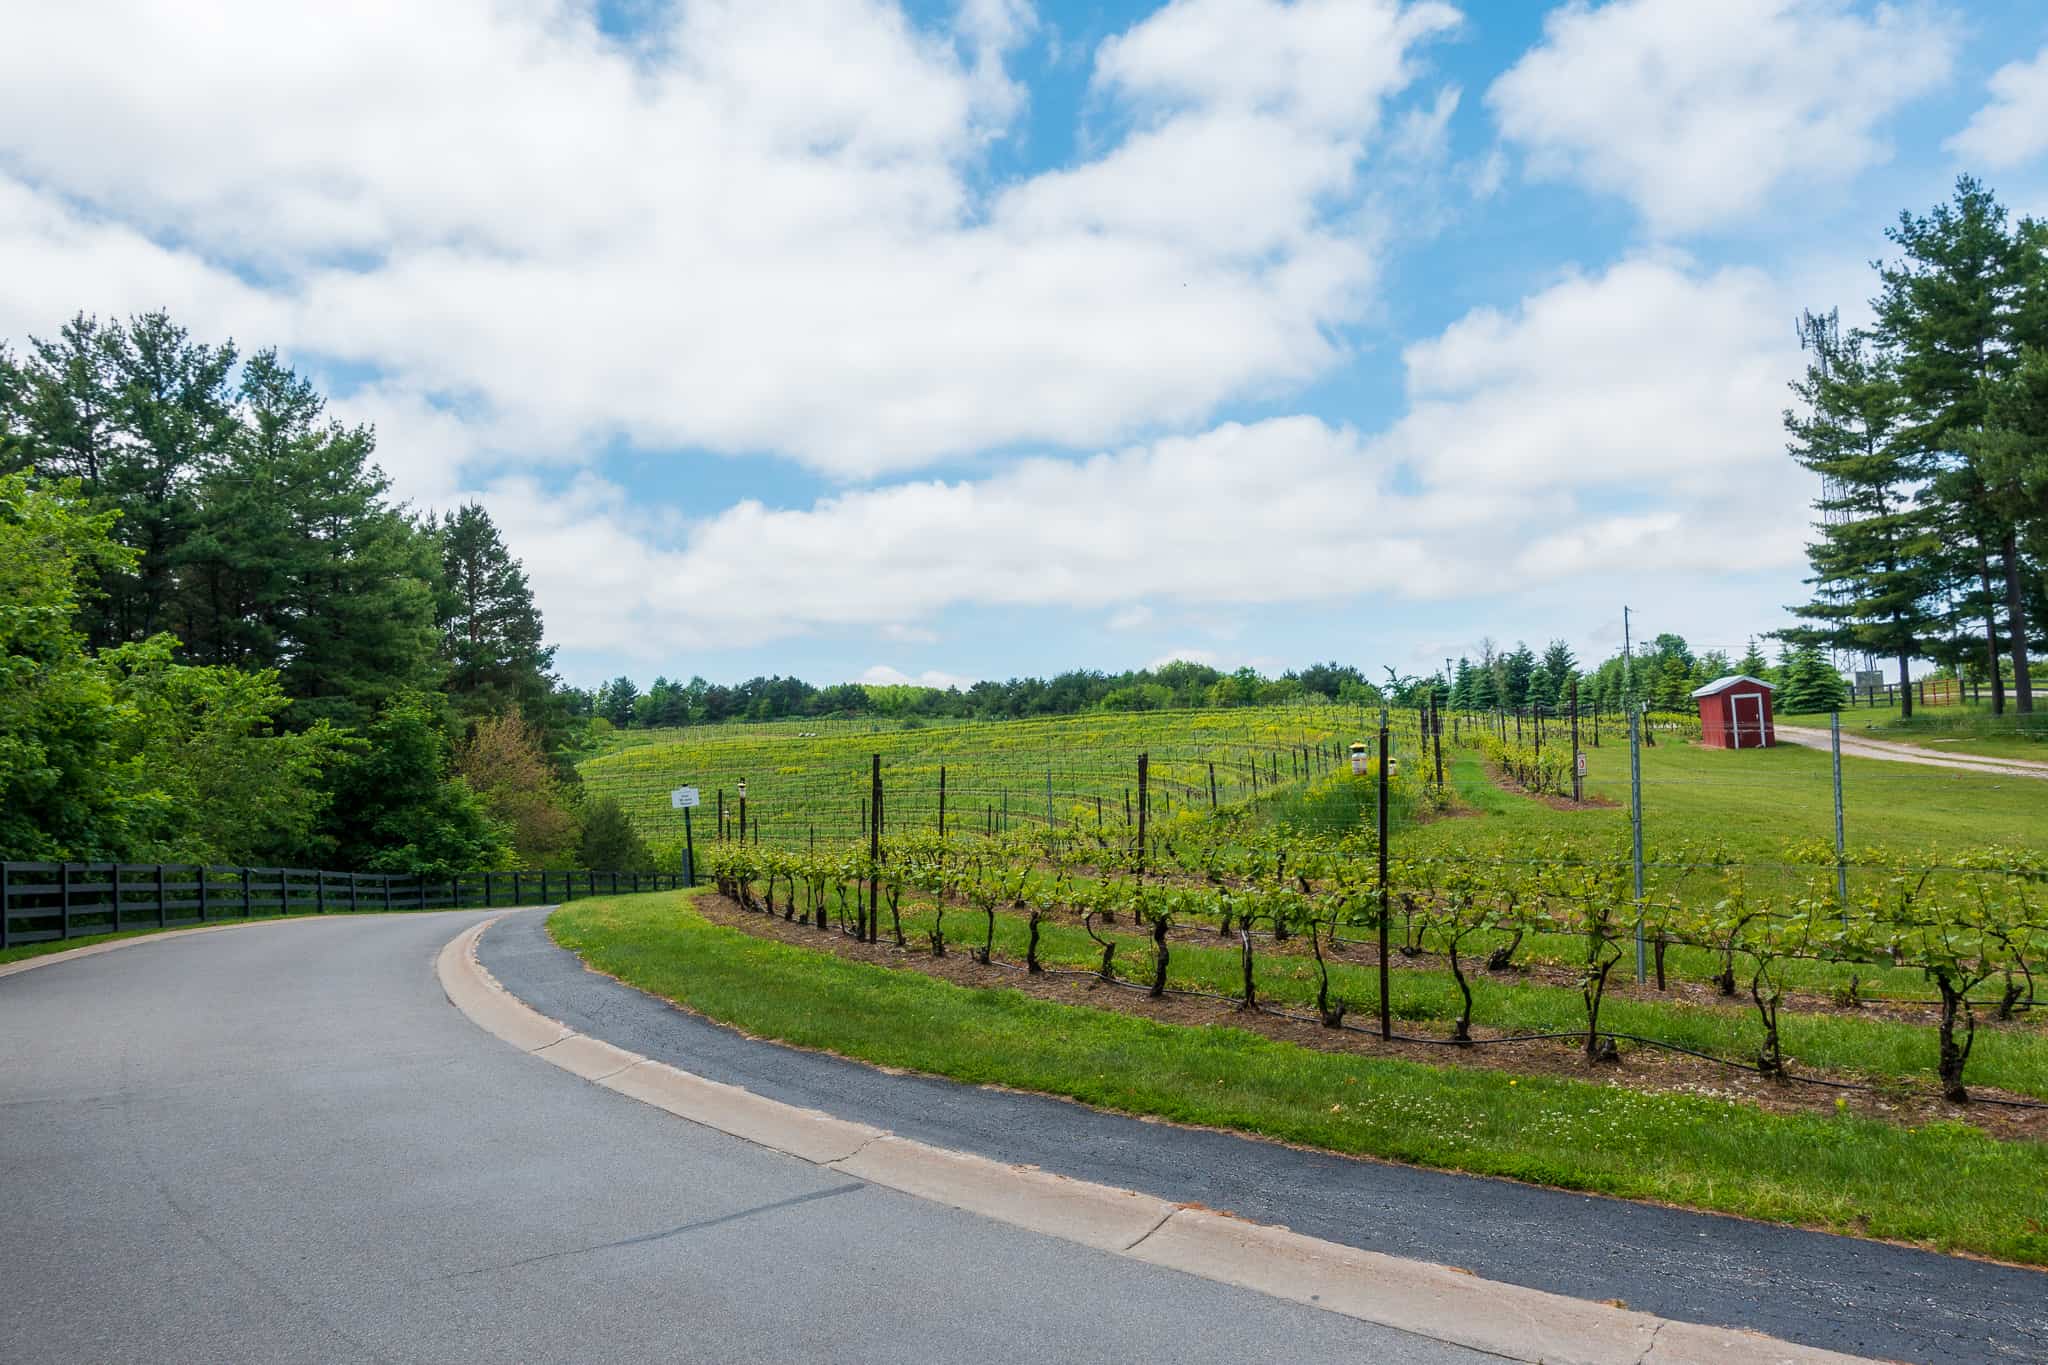 Black Star Farms Winery Driveway near Traverse City, Michigan